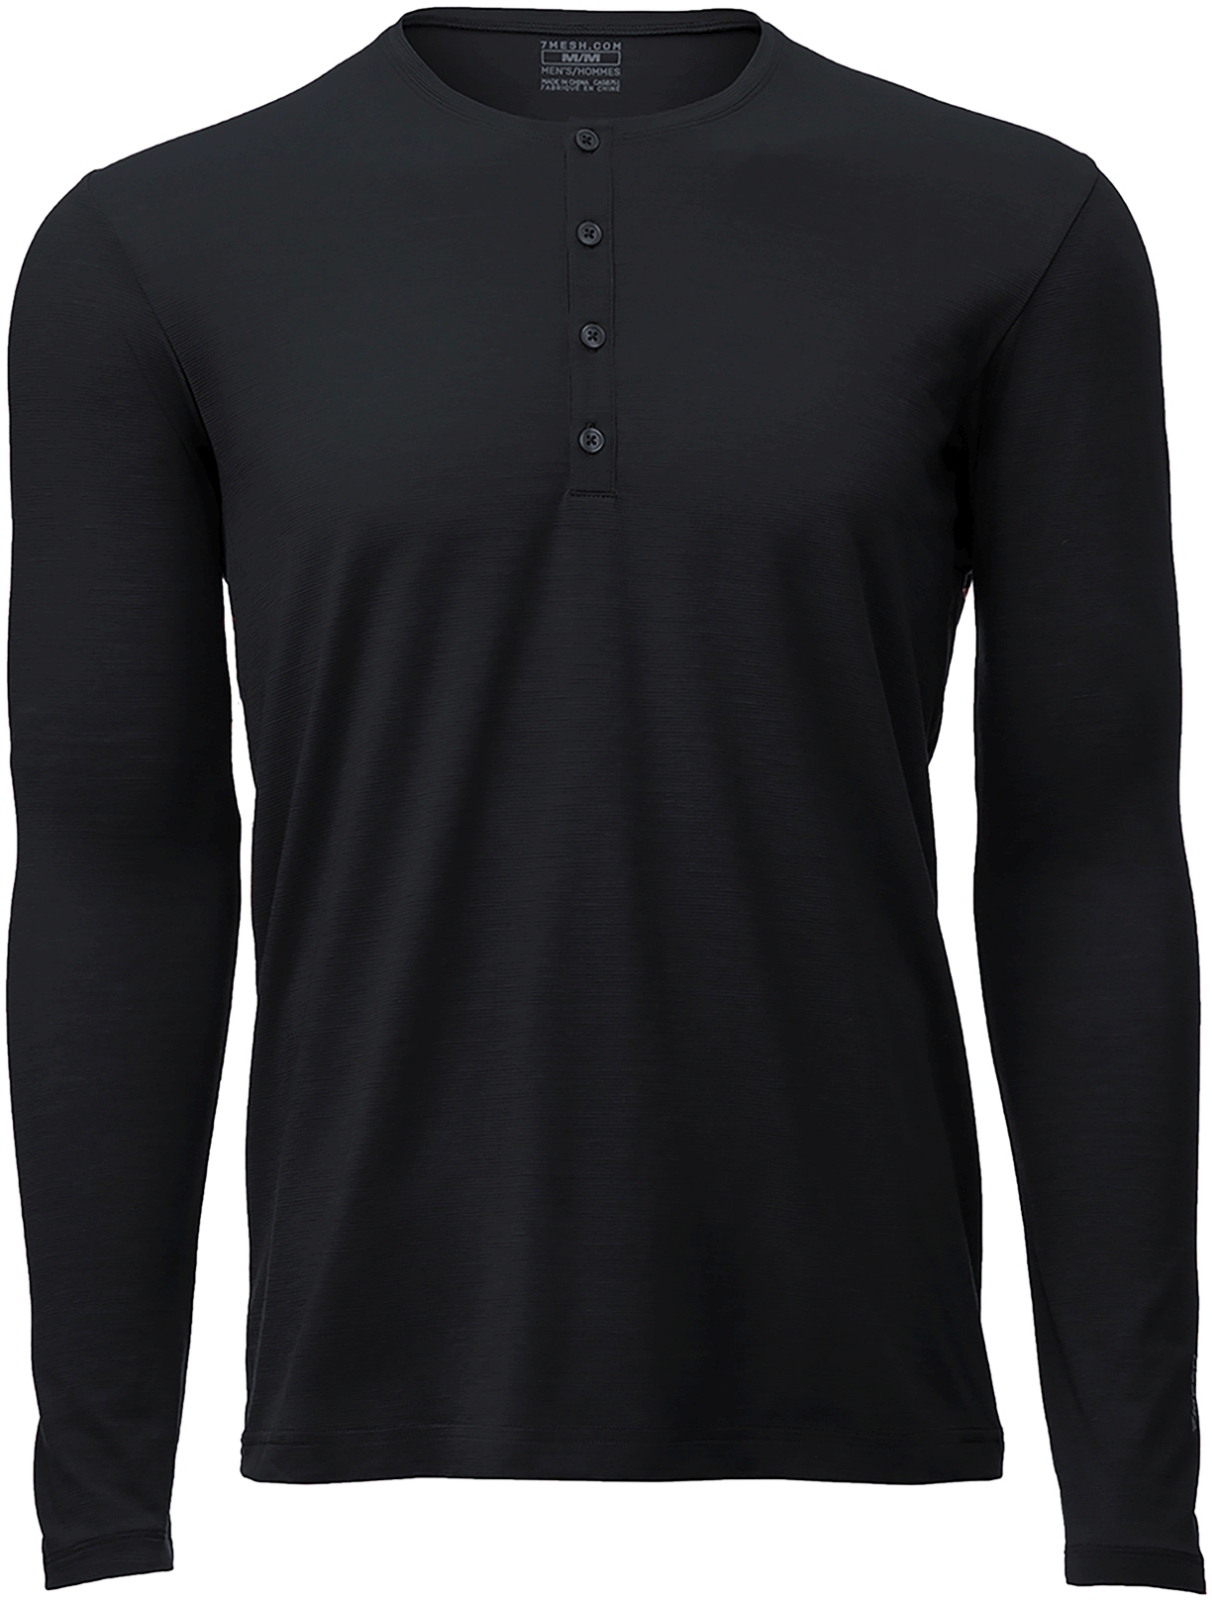 E-shop 7Mesh Desperado Shirt LS Men's - Black M